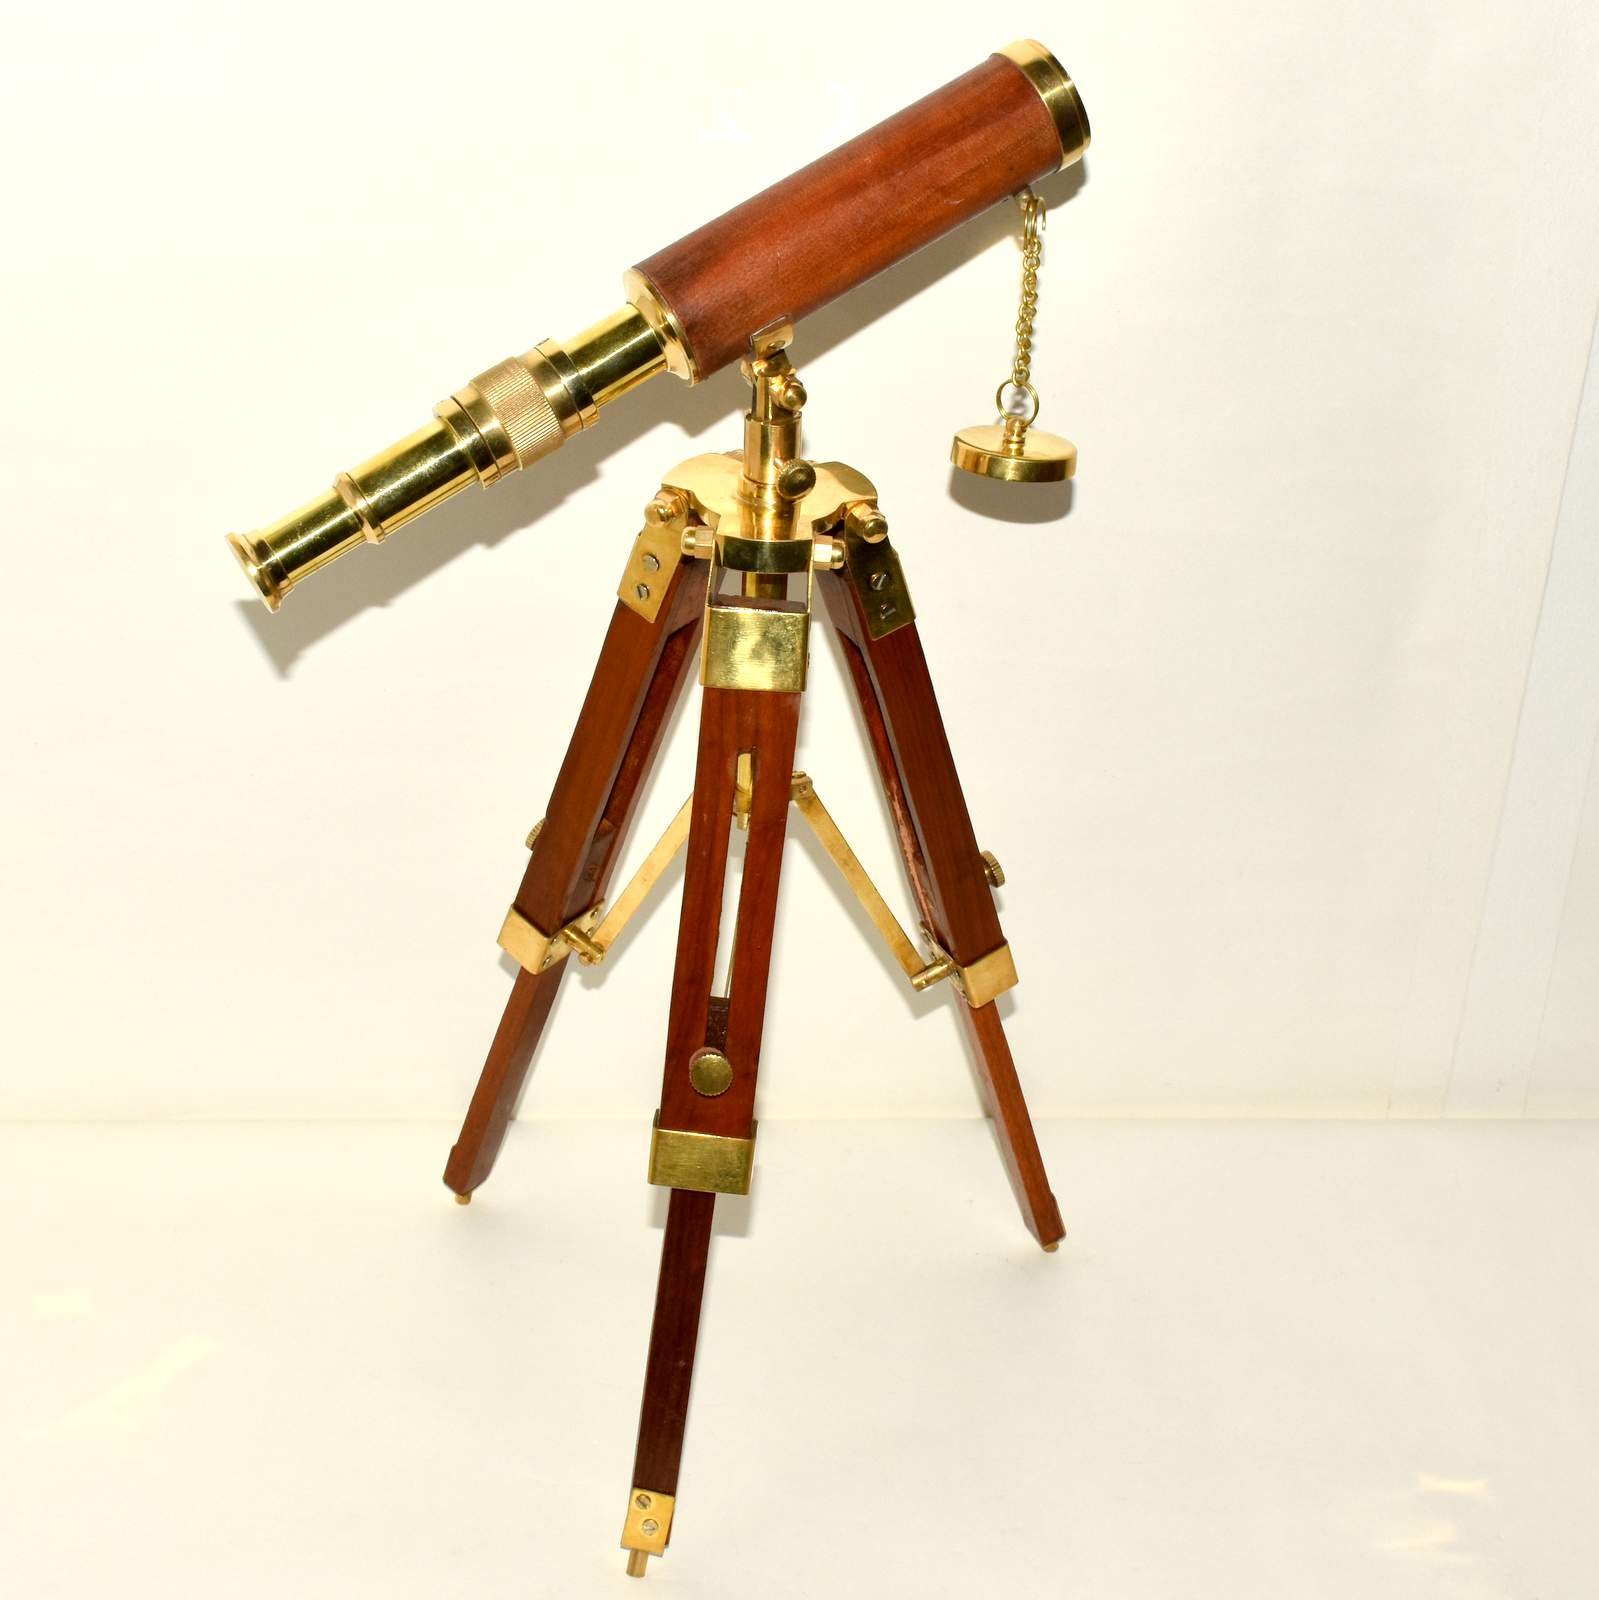 Brass Spyglass Maritime Nautical Telescope With Wooden Tripod Stand Decor.XCRE432